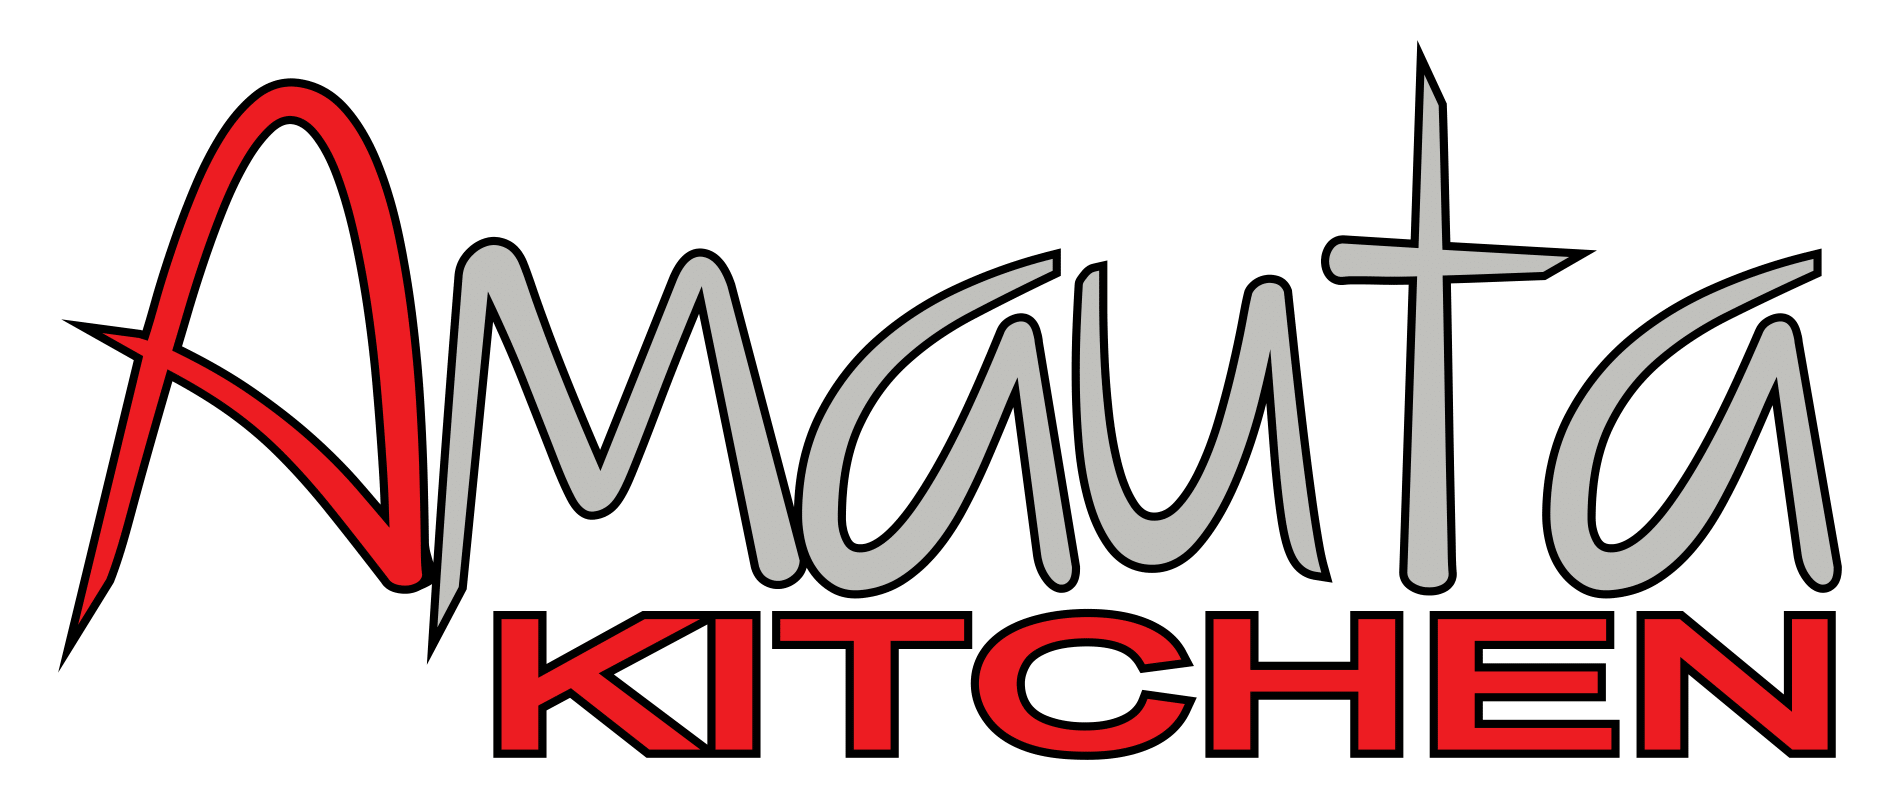 Amauta Kitchen Logo